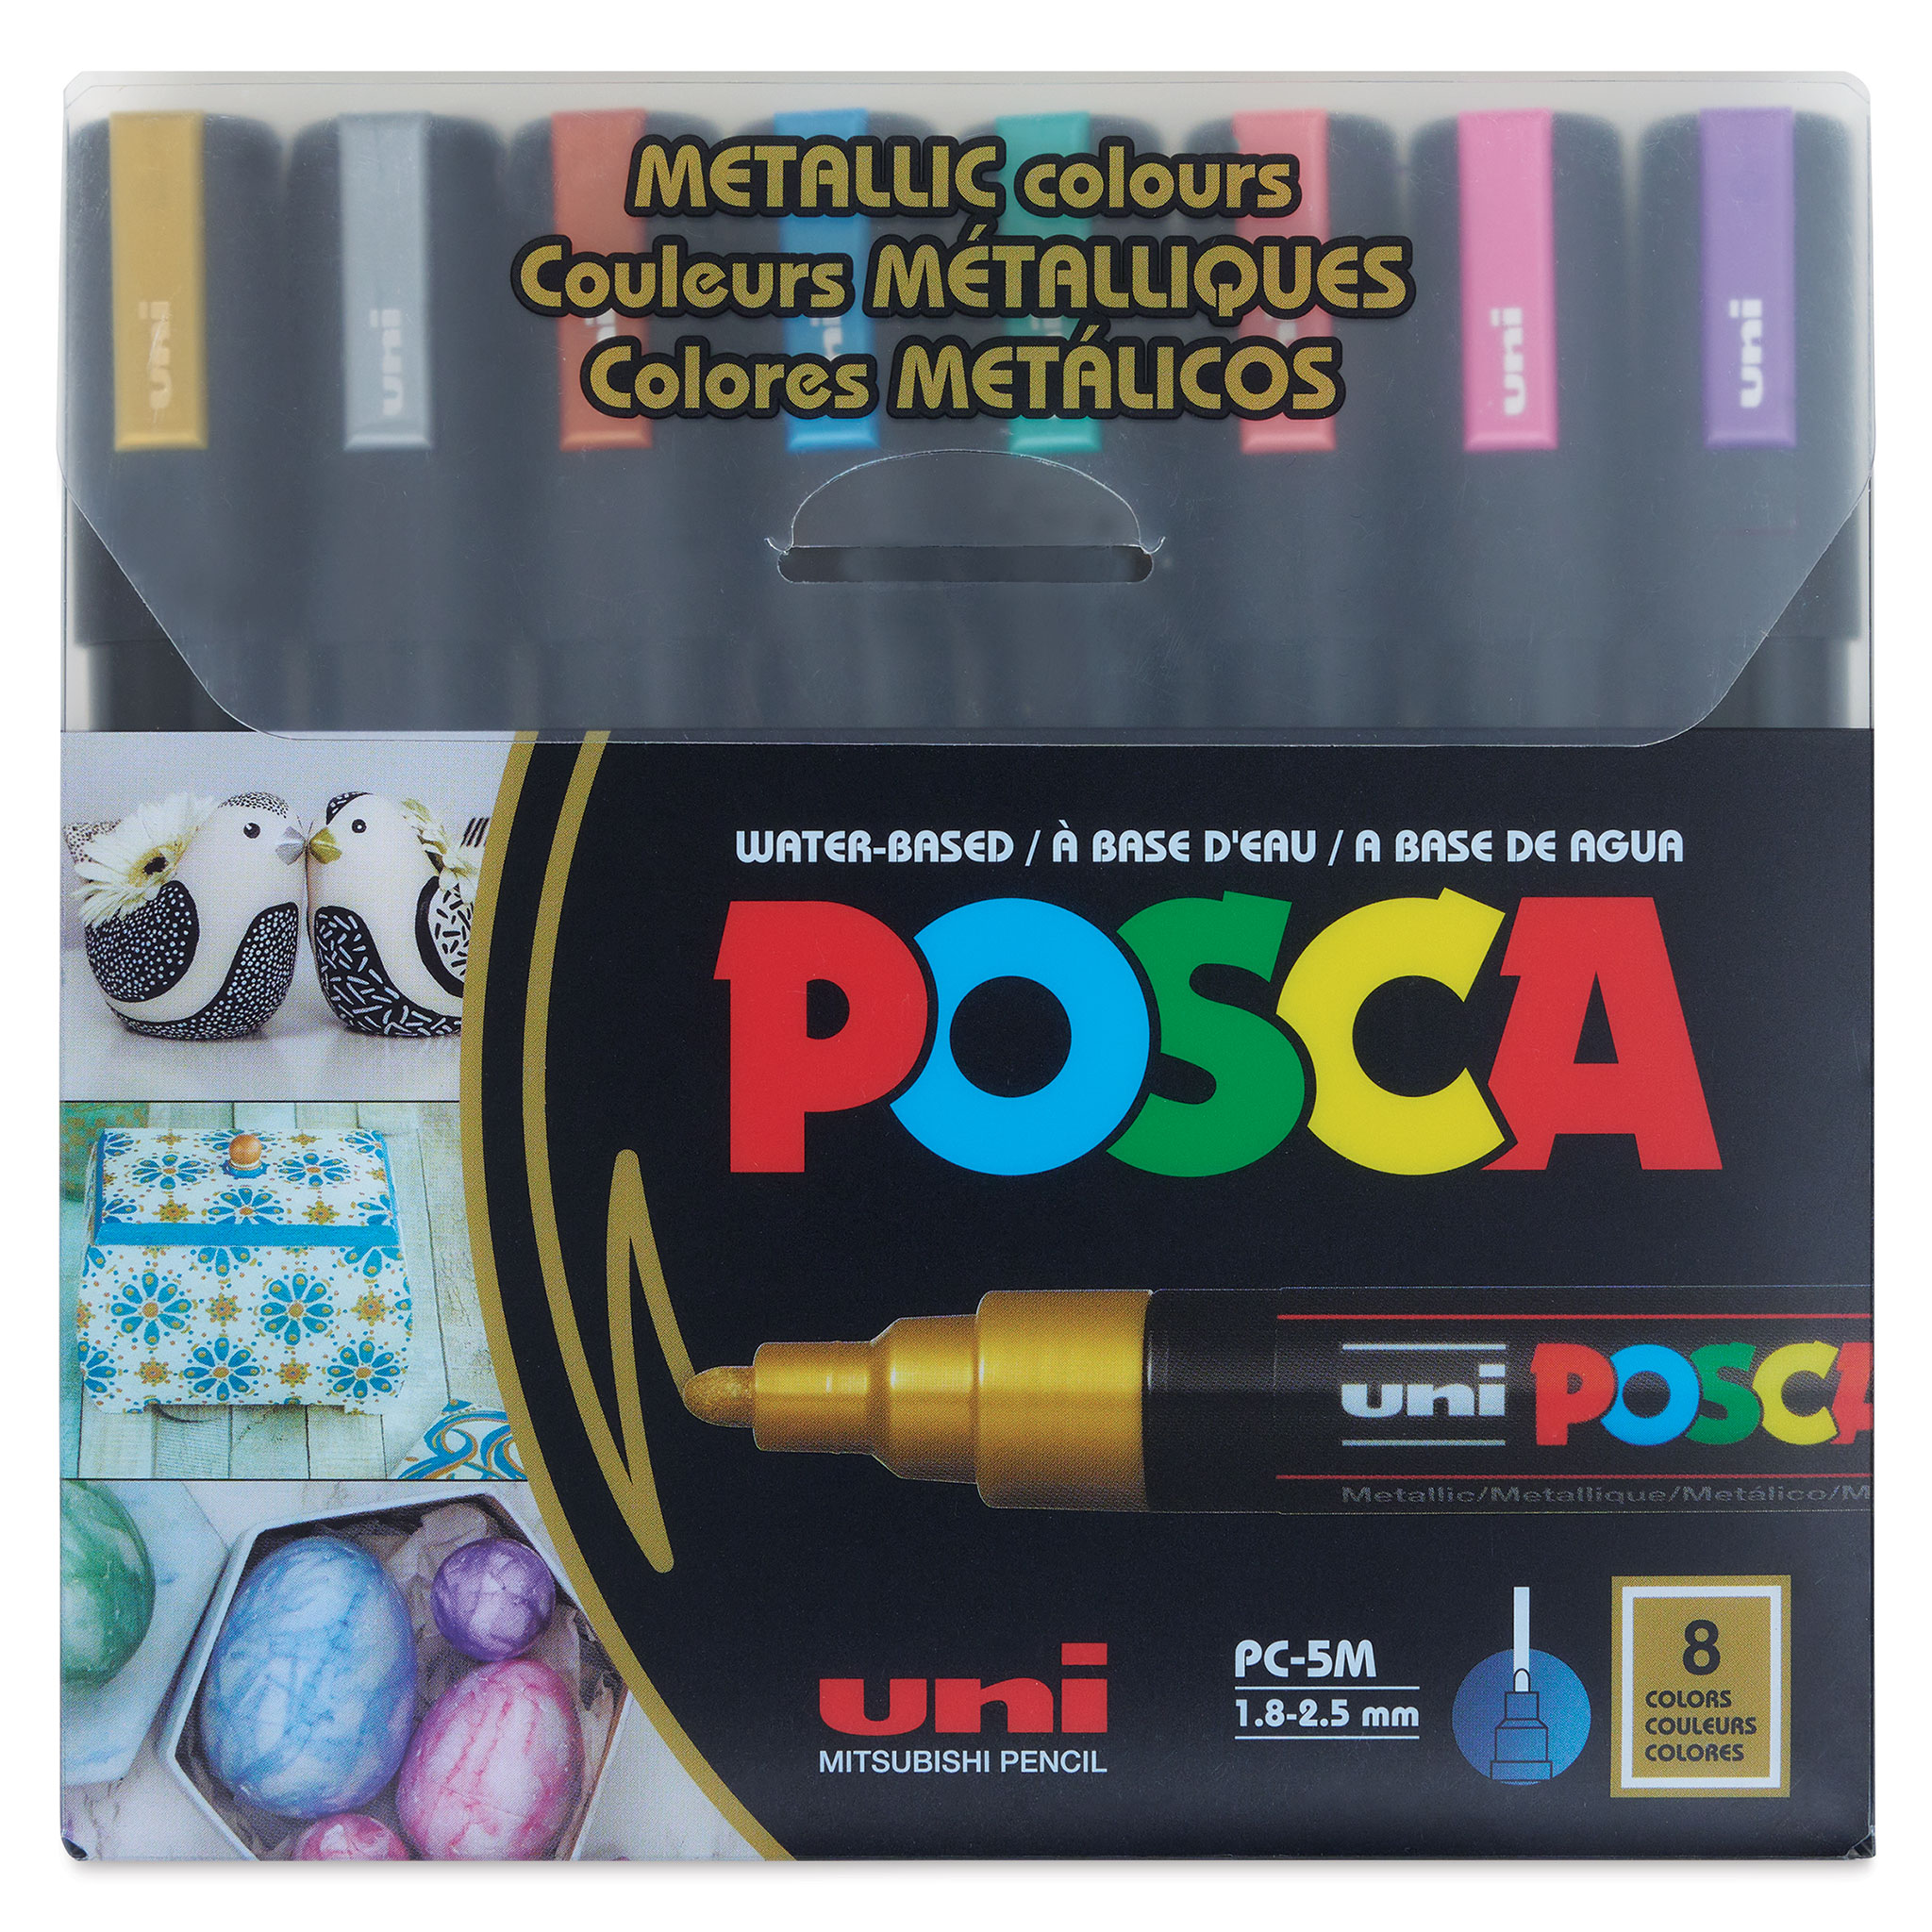 POSCA - Shop